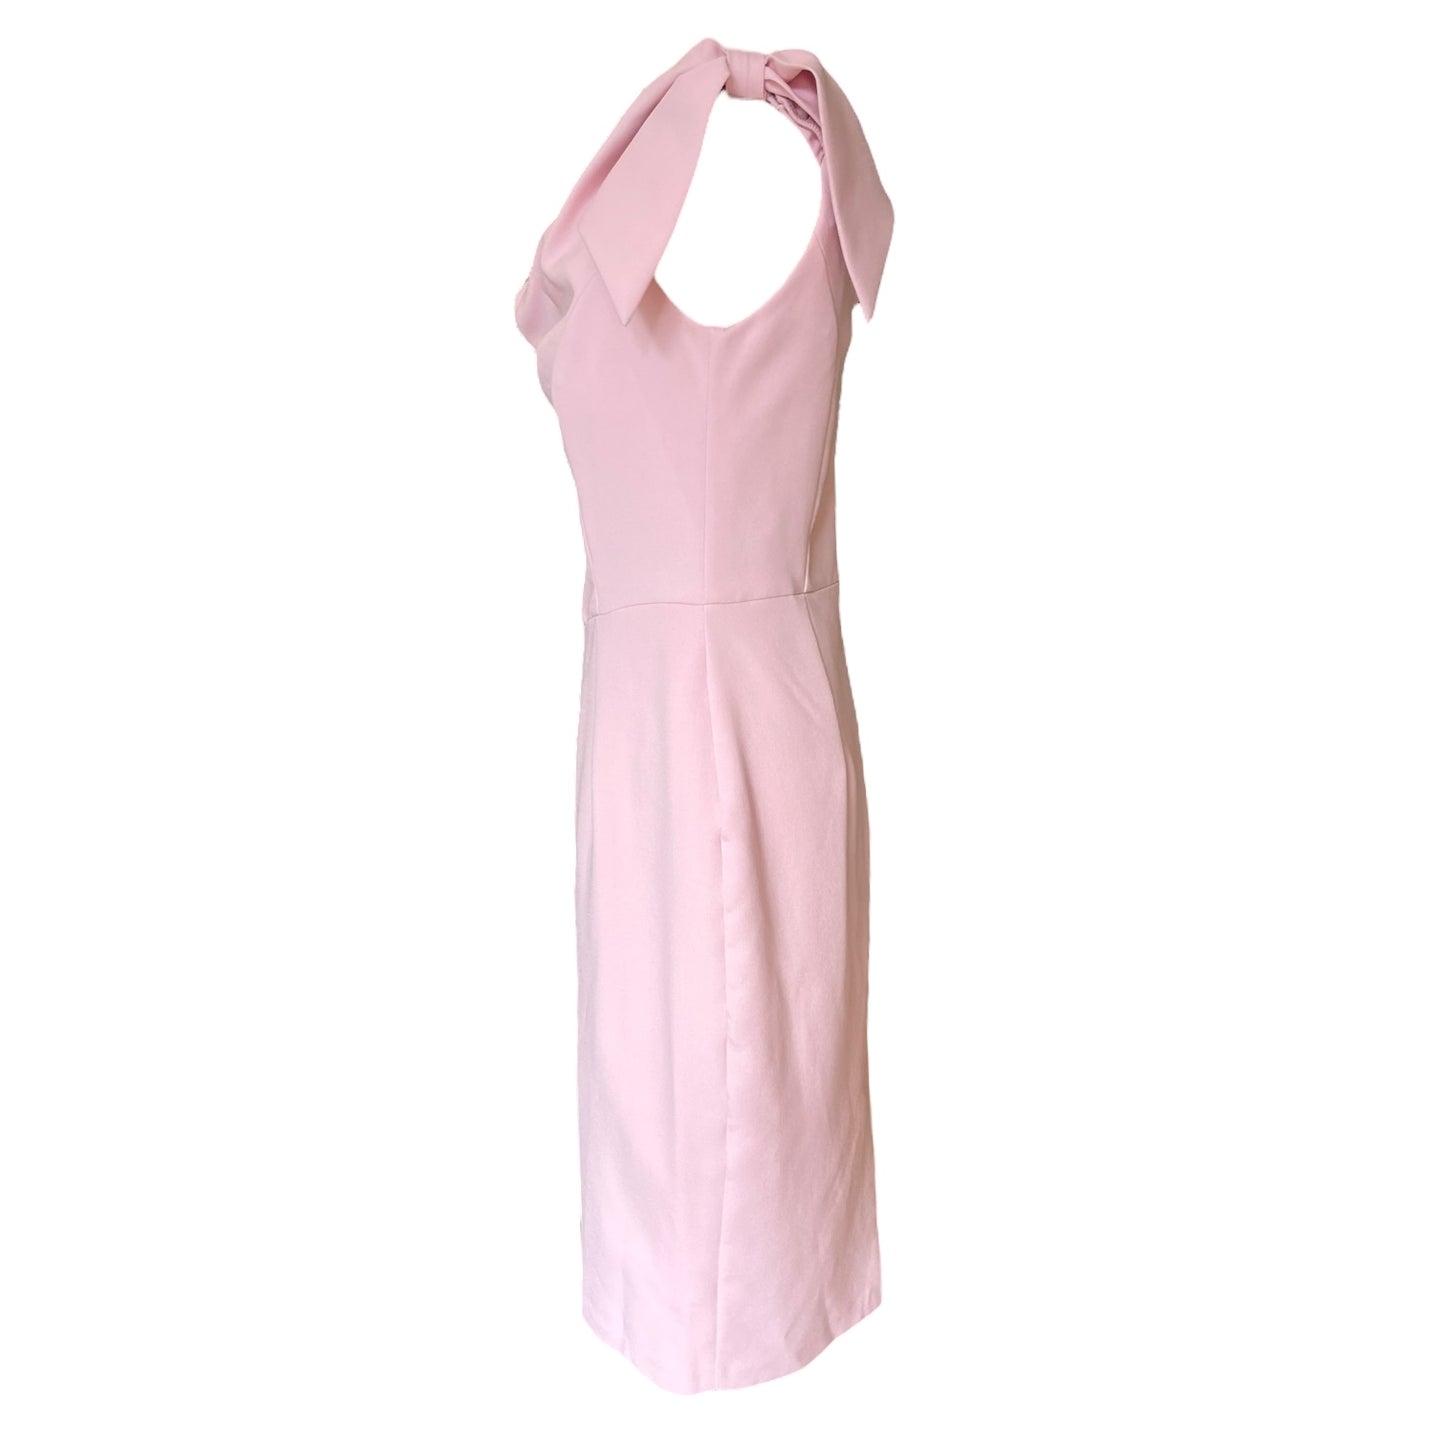 The Pretty Dress Co. Pink Shift Dress - 12